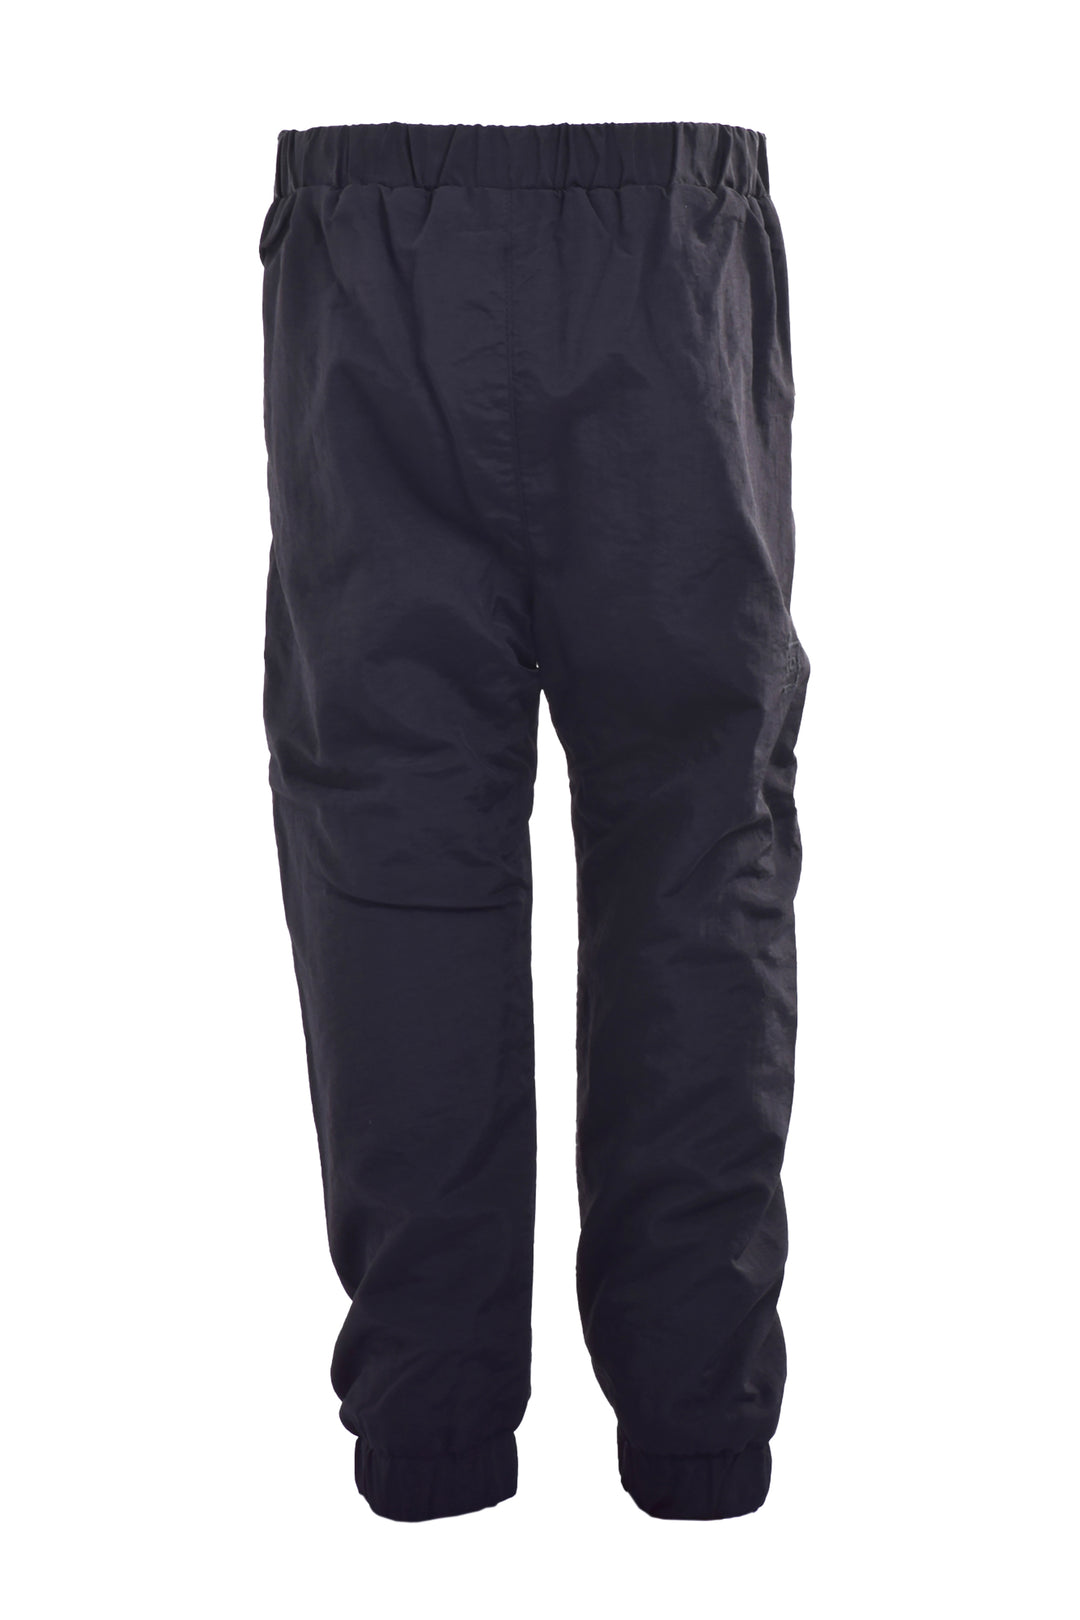 Nylon pants lined with 100% polar fleece polyester.